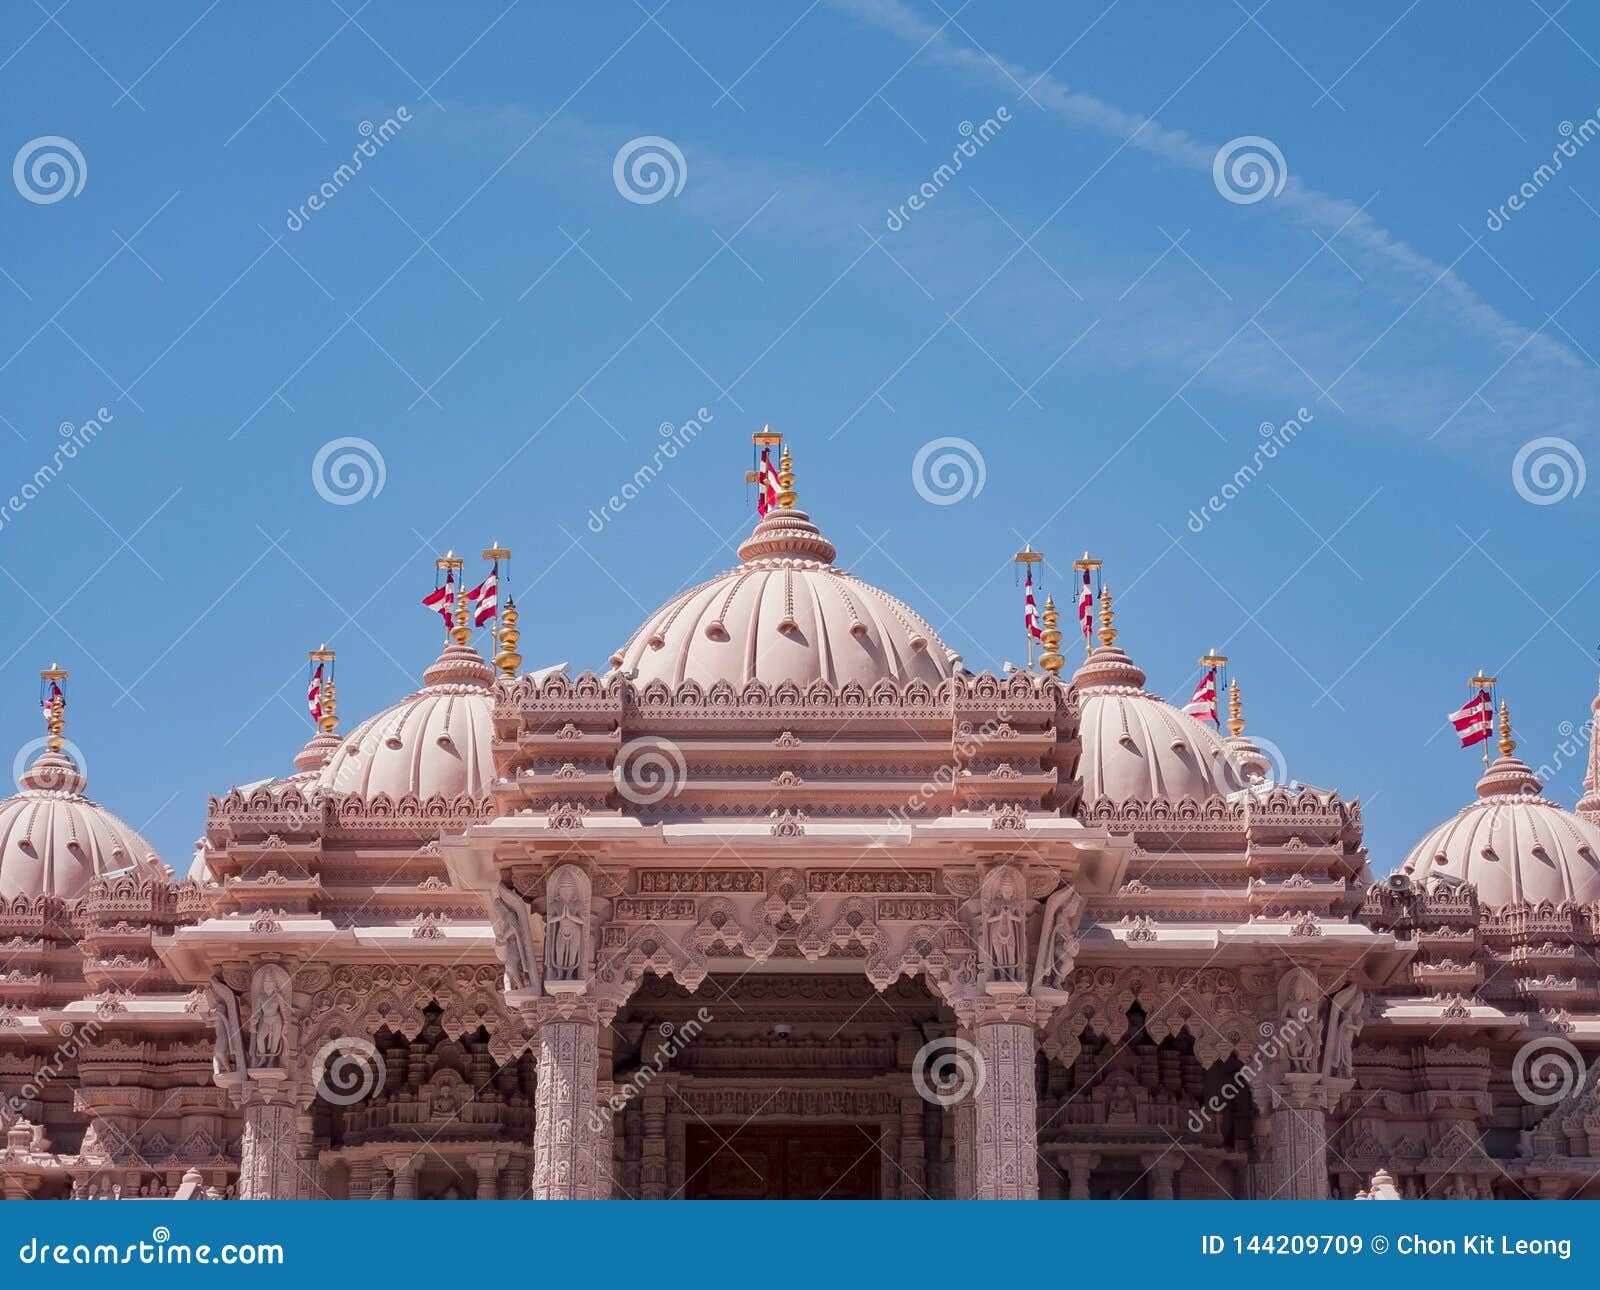 exterior view of the famous baps shri swaminarayan mandir